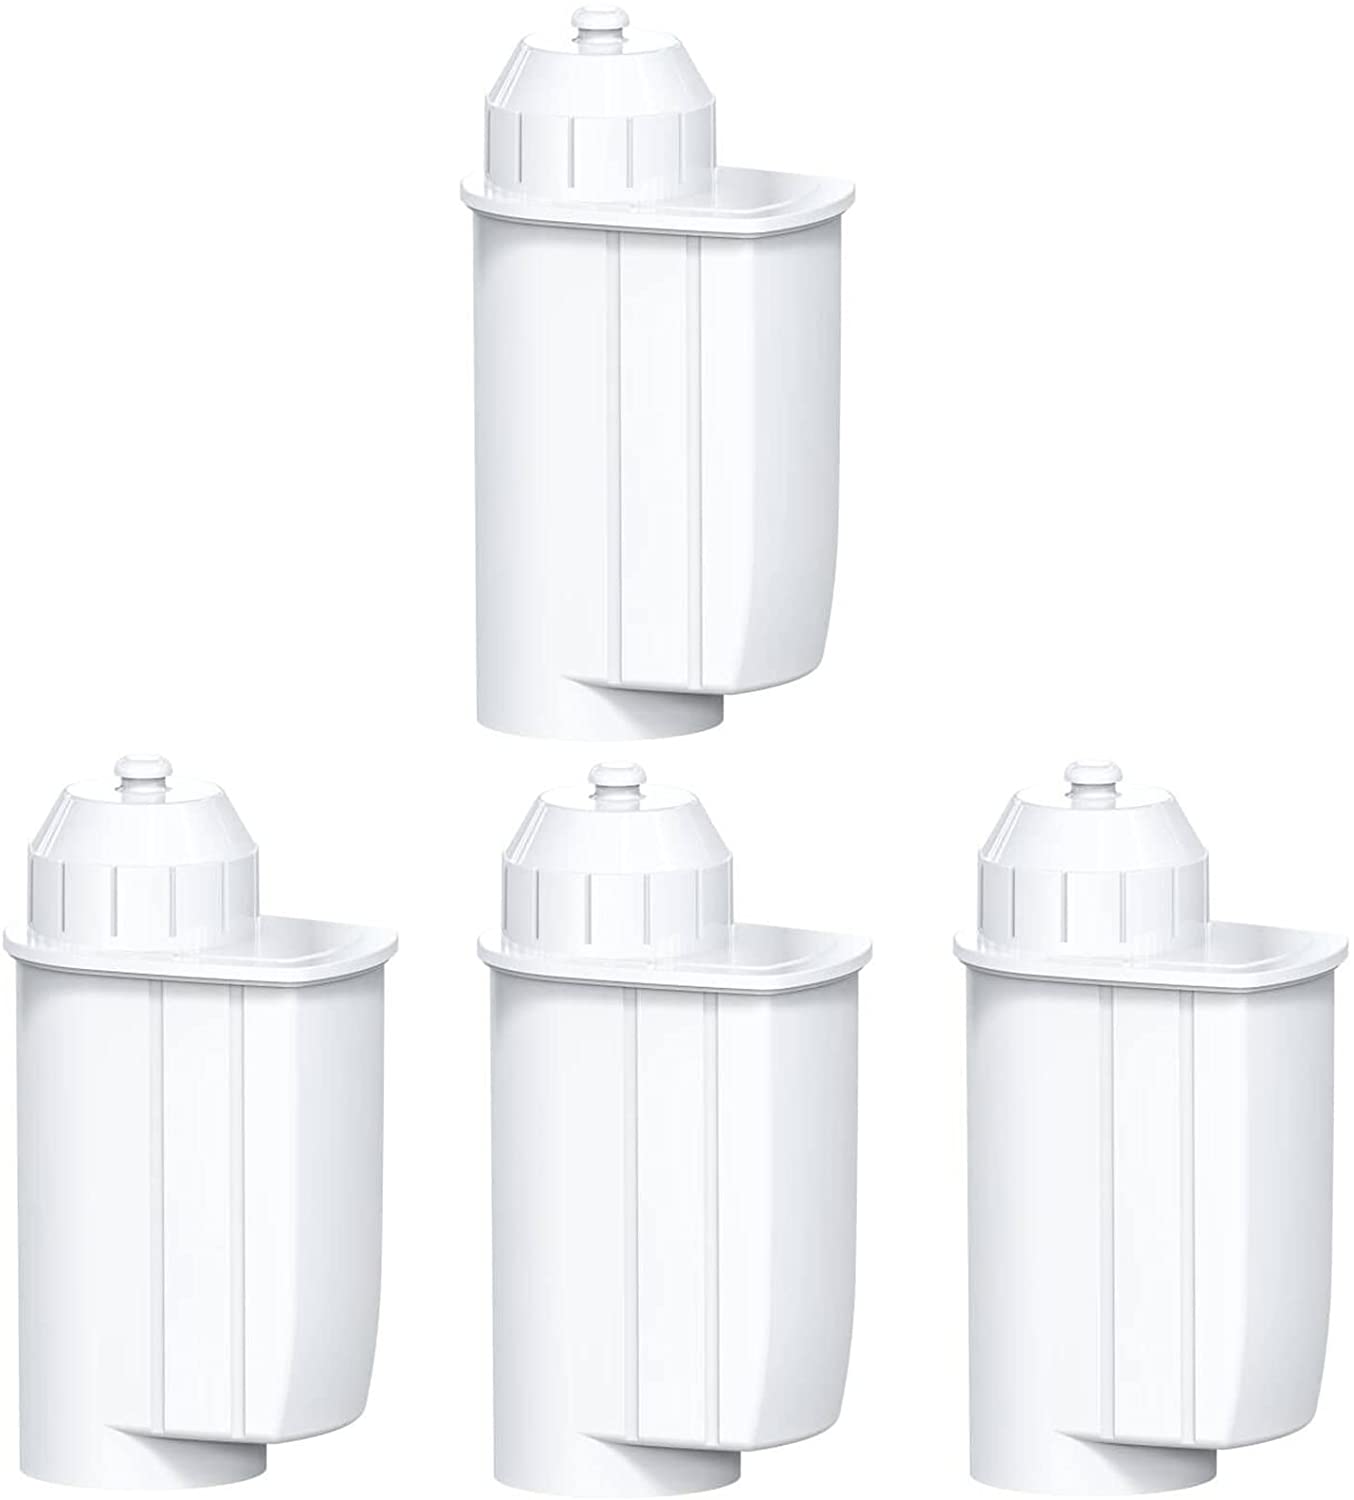 Niuzemyko 4 x Coffee Water Filters Compatible with Siemens, Brita Intenza, Bosch, Gag